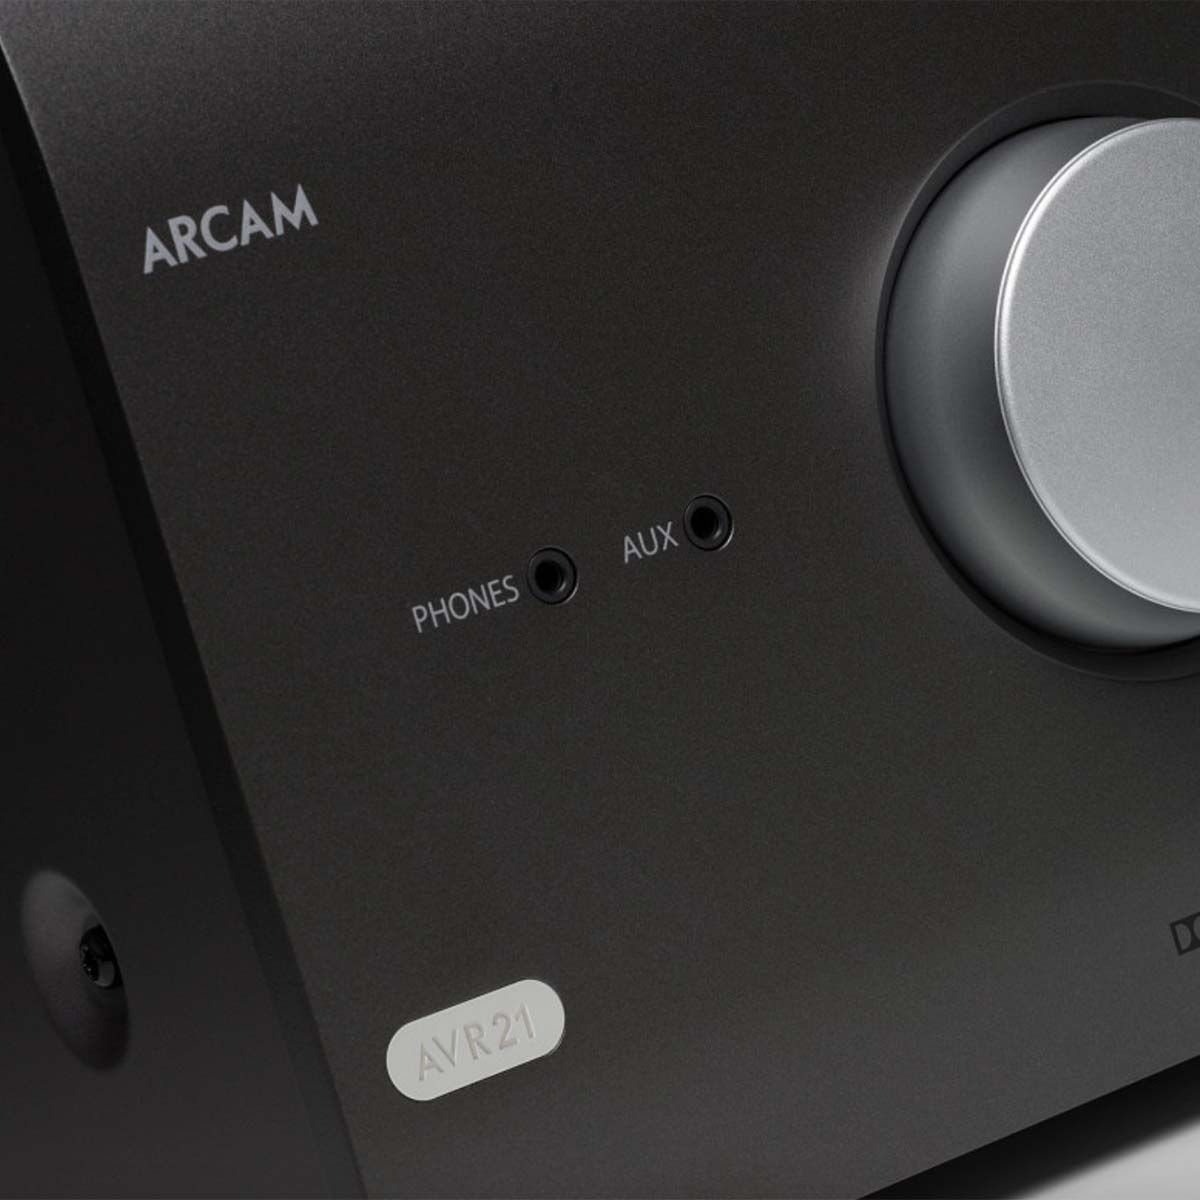 Arcam AVR21 AV Receiver, detailed knob view